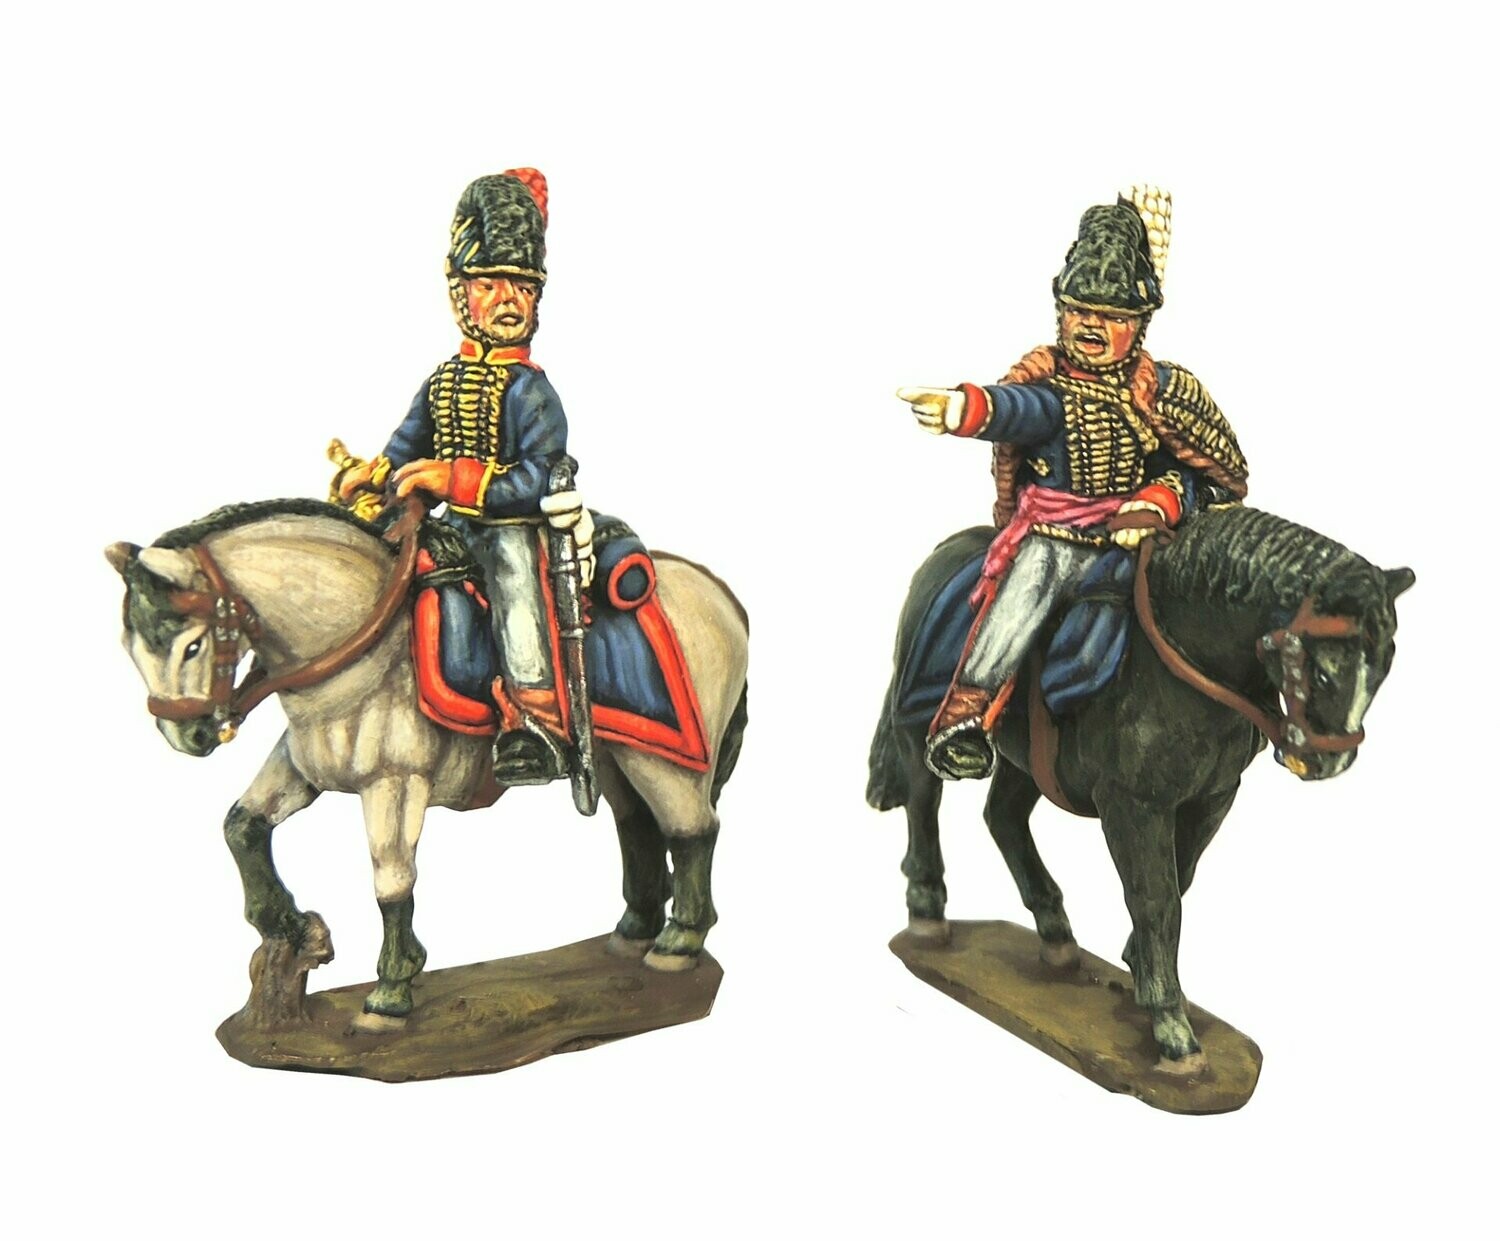 28mm British Napoleonic Royal Horse Artillery mounted command